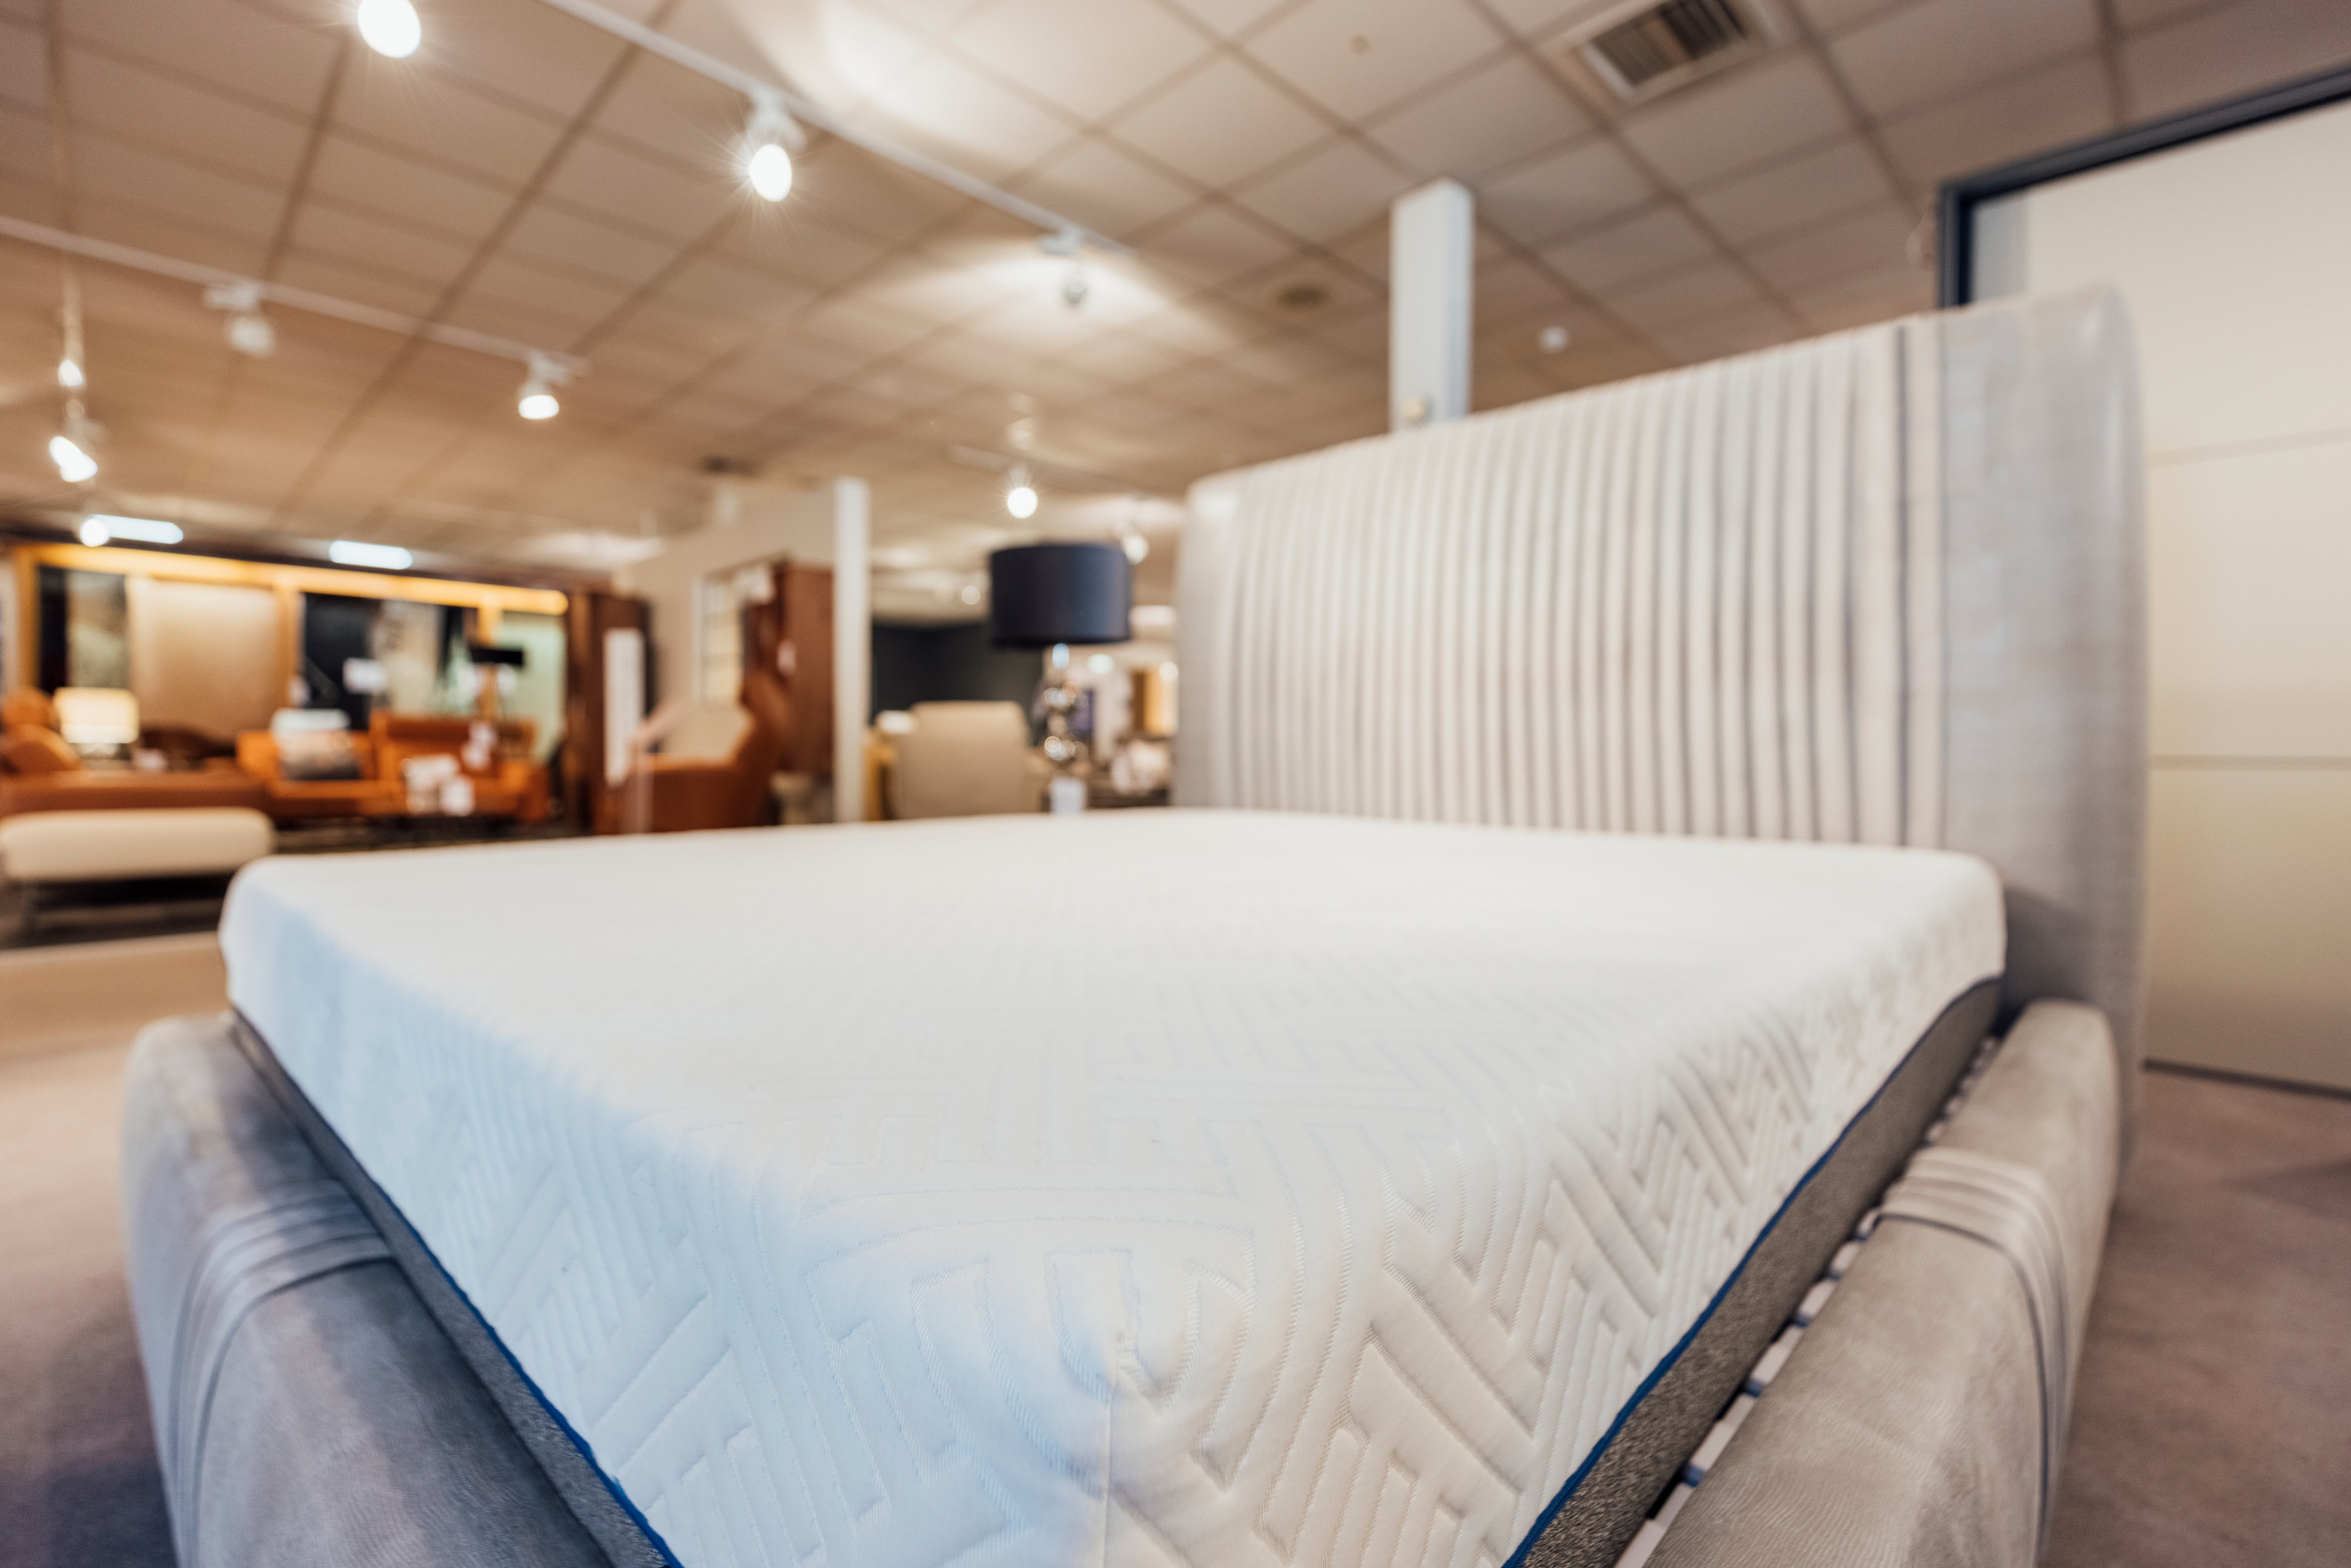 a bare mattress in a store